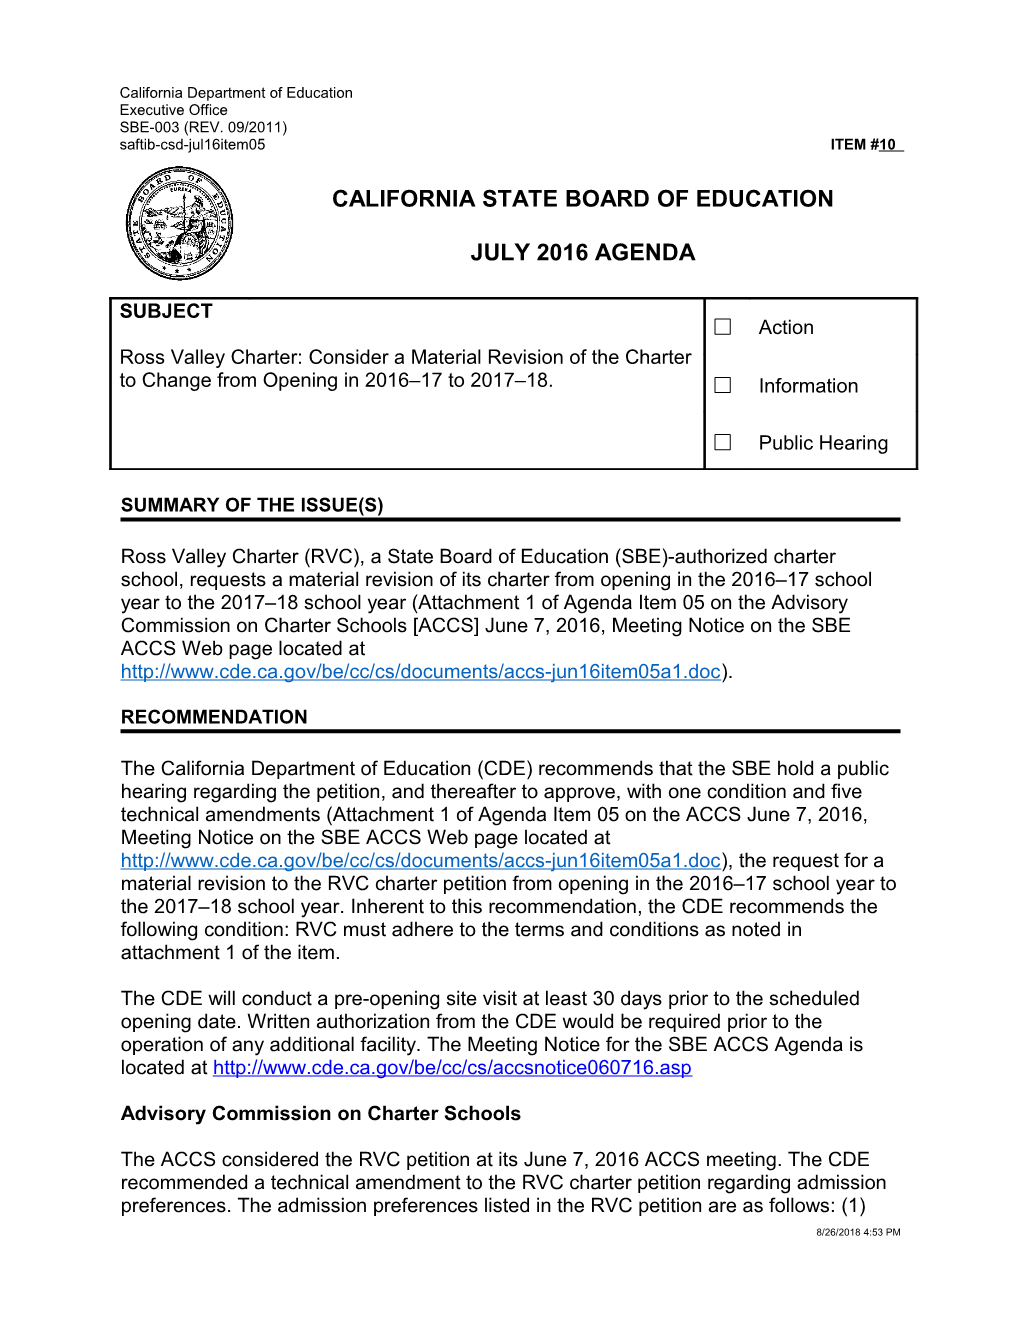 July 2016 Agenda Item 10 - Meeting Agendas (CA State Board of Education)